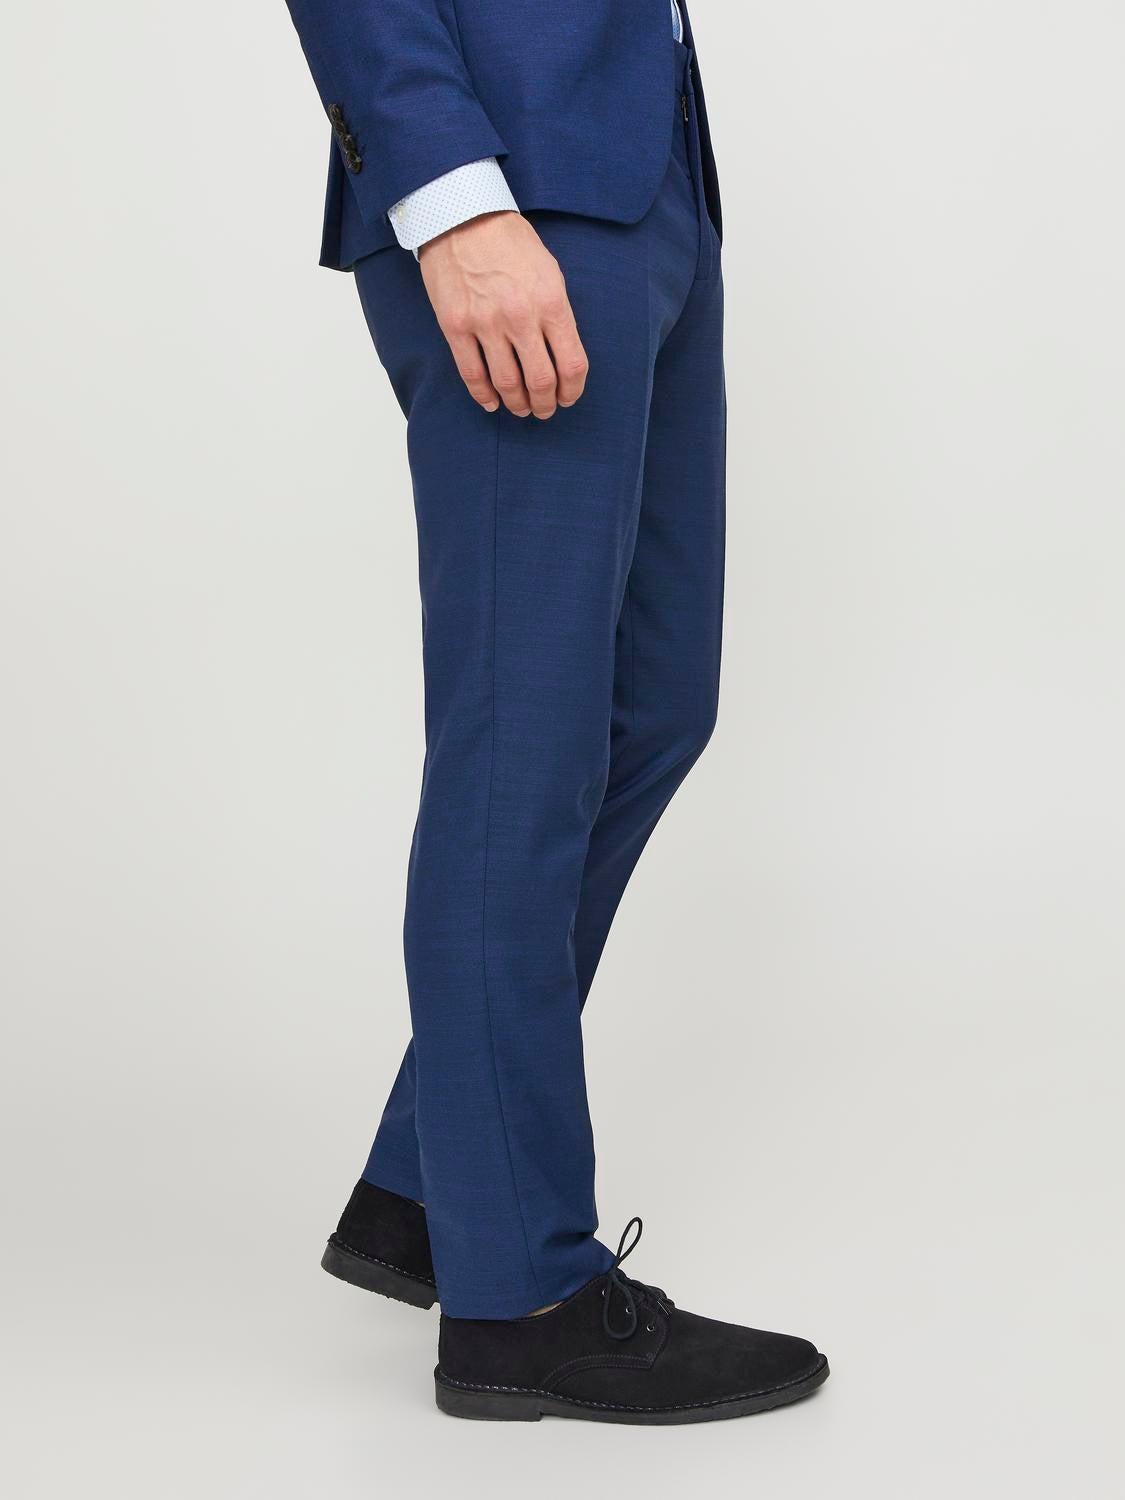 Men's Grey Skinny Fit Suit Trousers | Ben Sherman | Est 1963